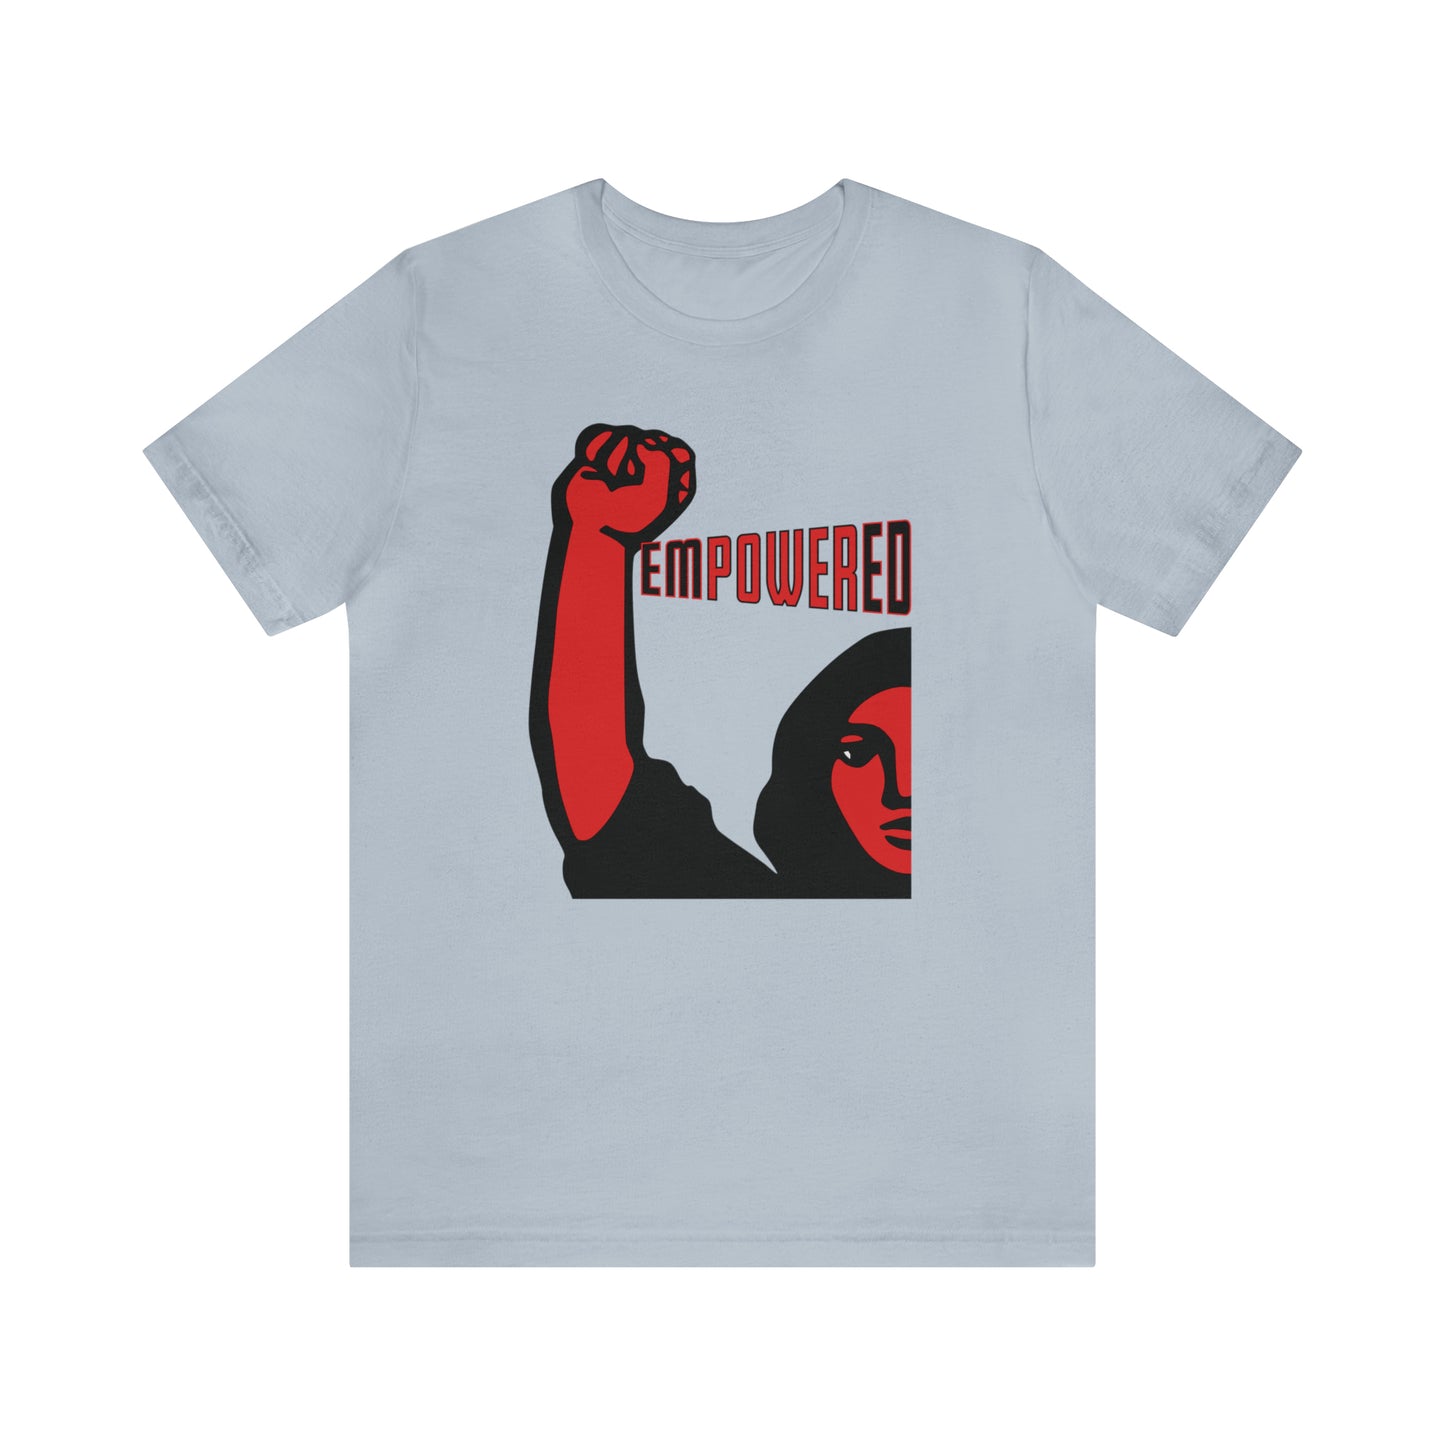 Empowered Women - Unisex T-Shirt